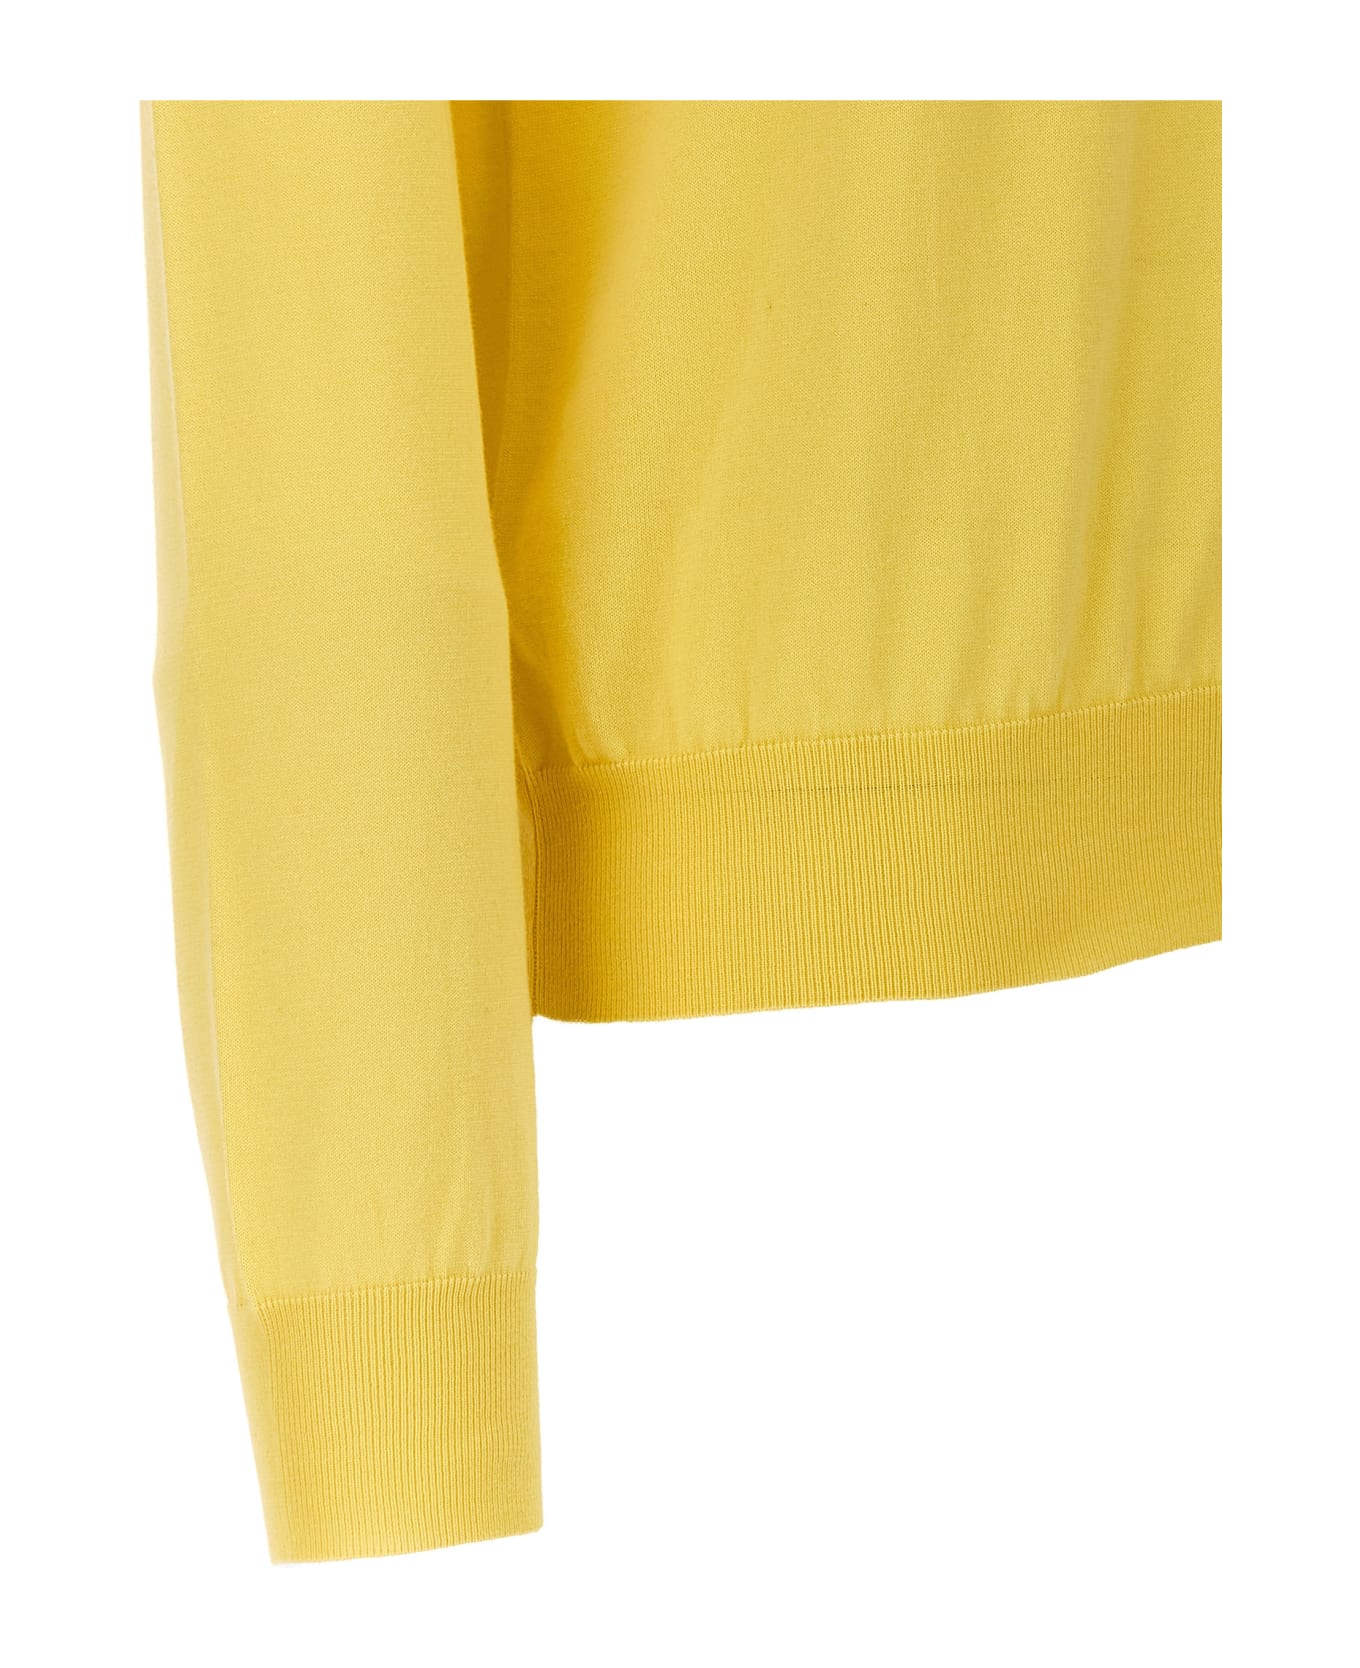 Jil Sander Round-neck Sweater - Yellow